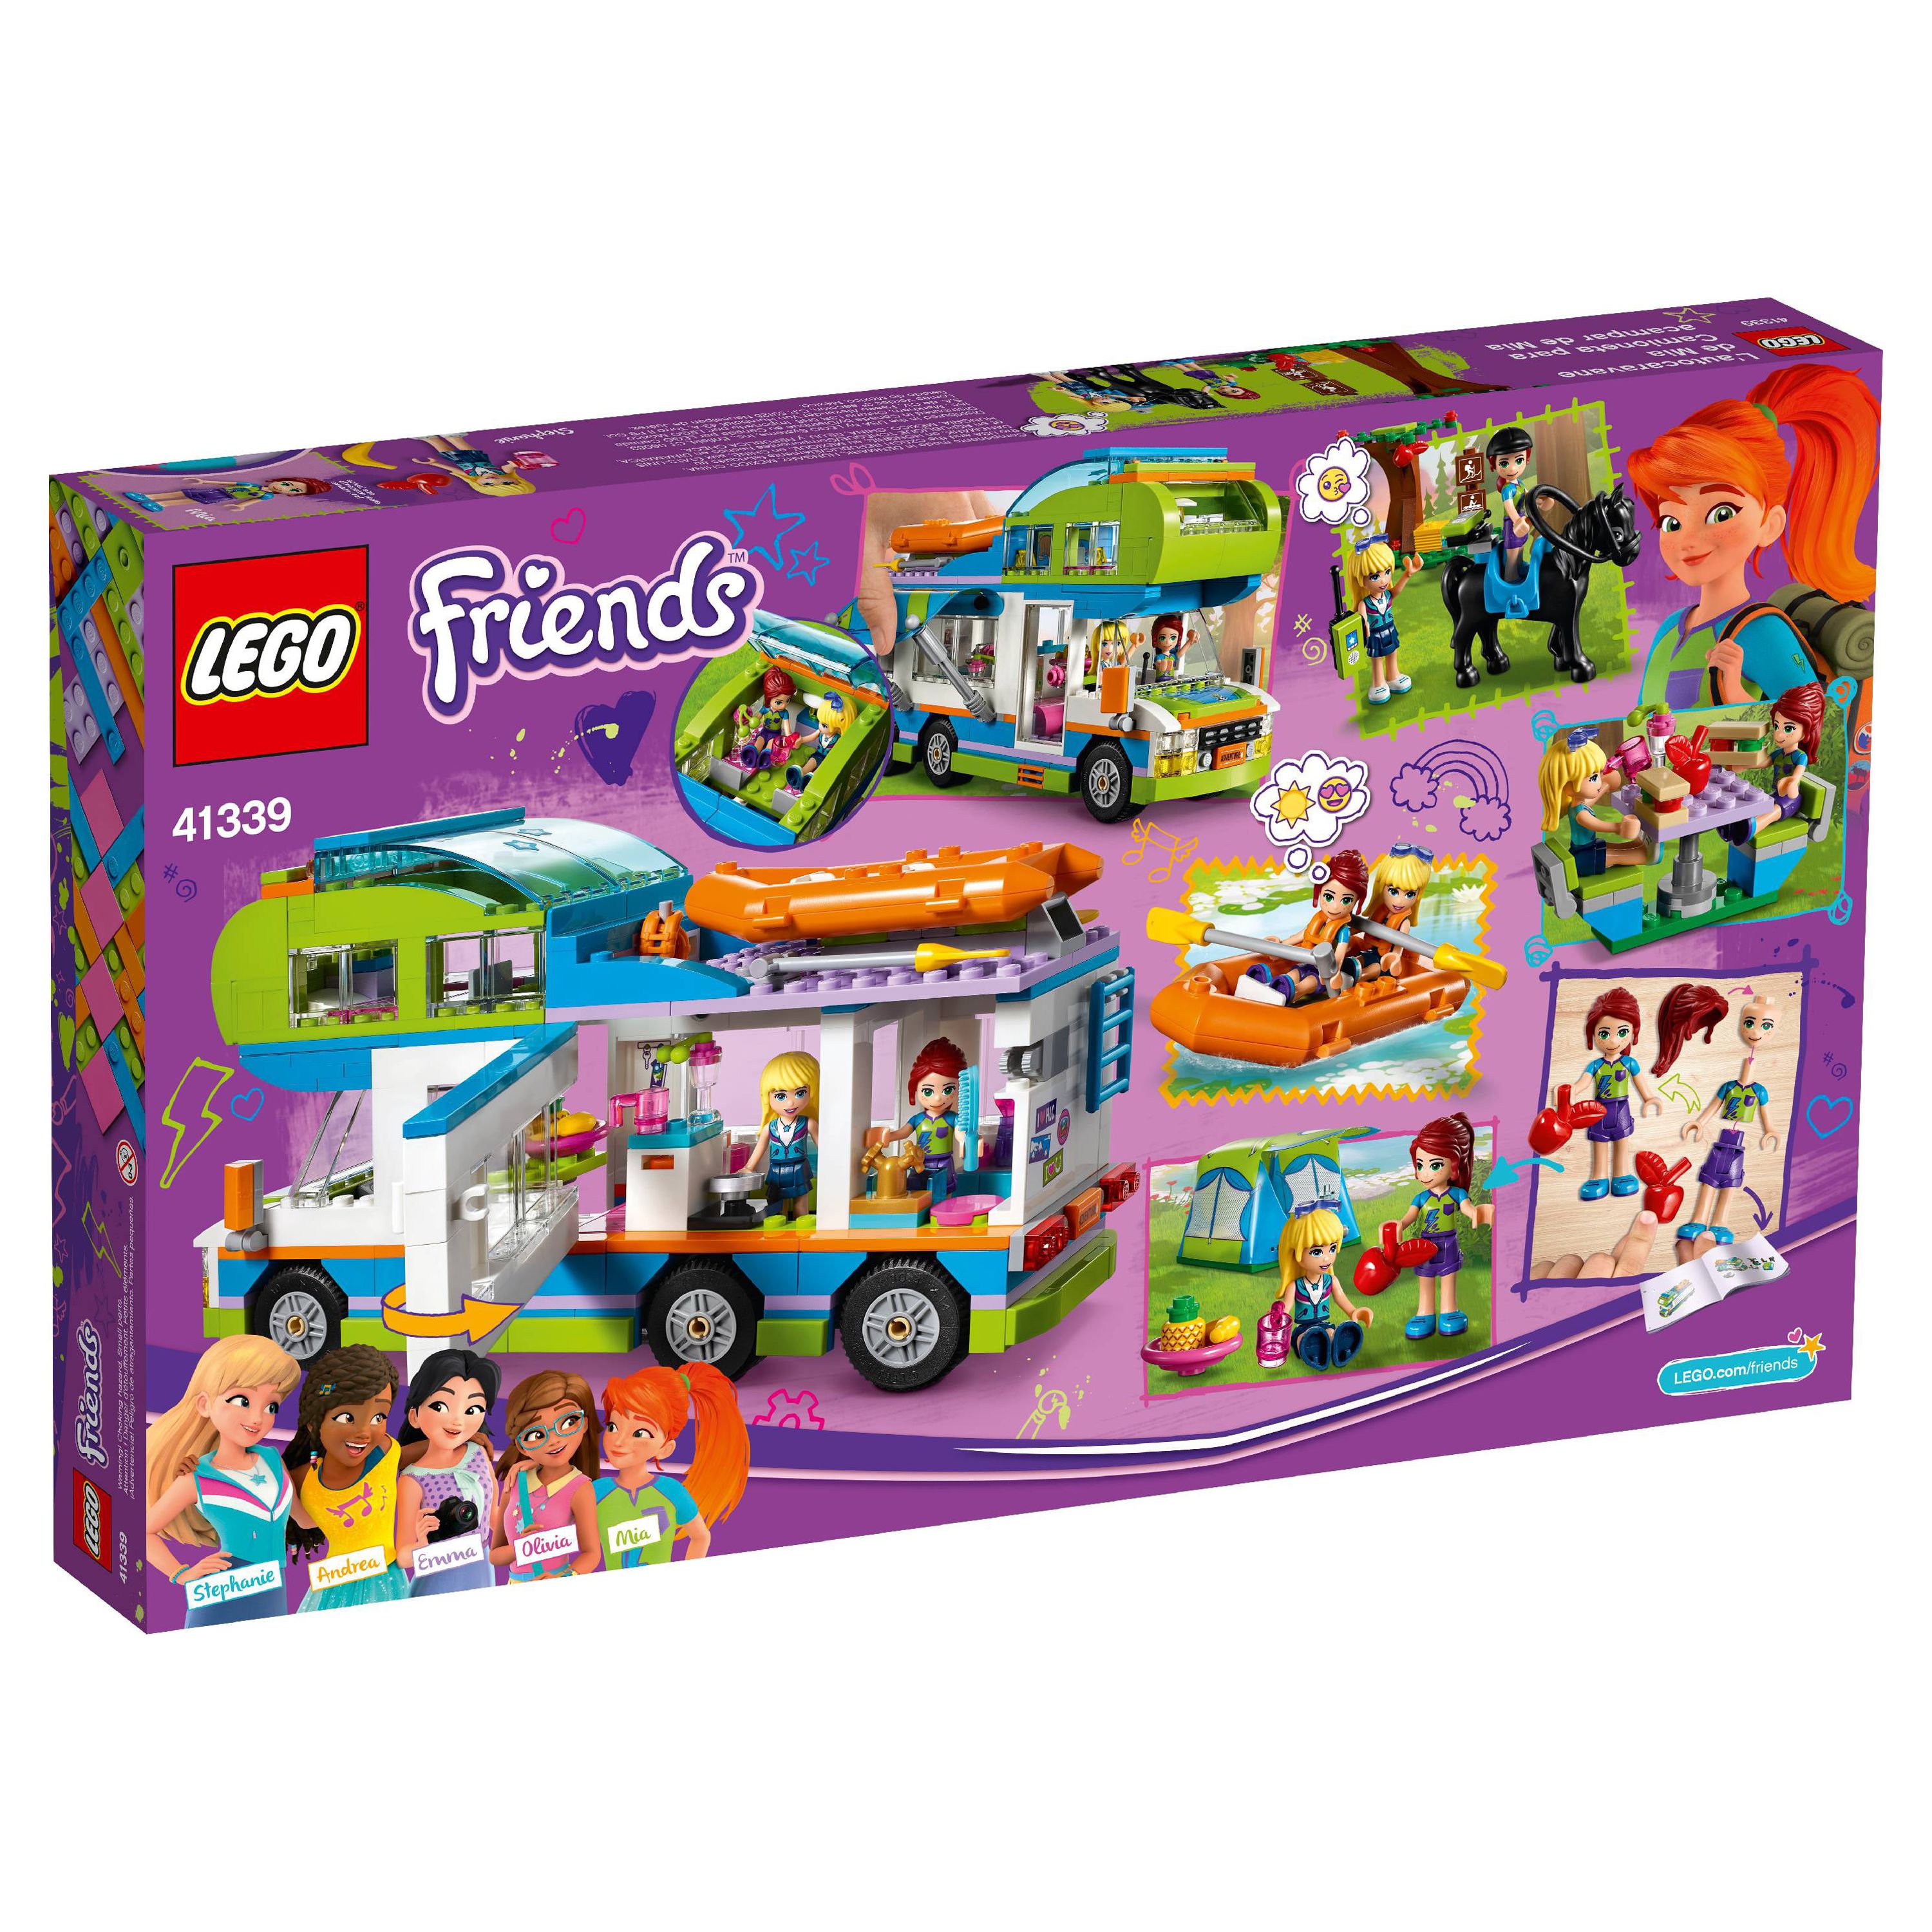 LEGO Friends Mia's Camper Van 41339 Building Set (488 Pieces) - image 2 of 7